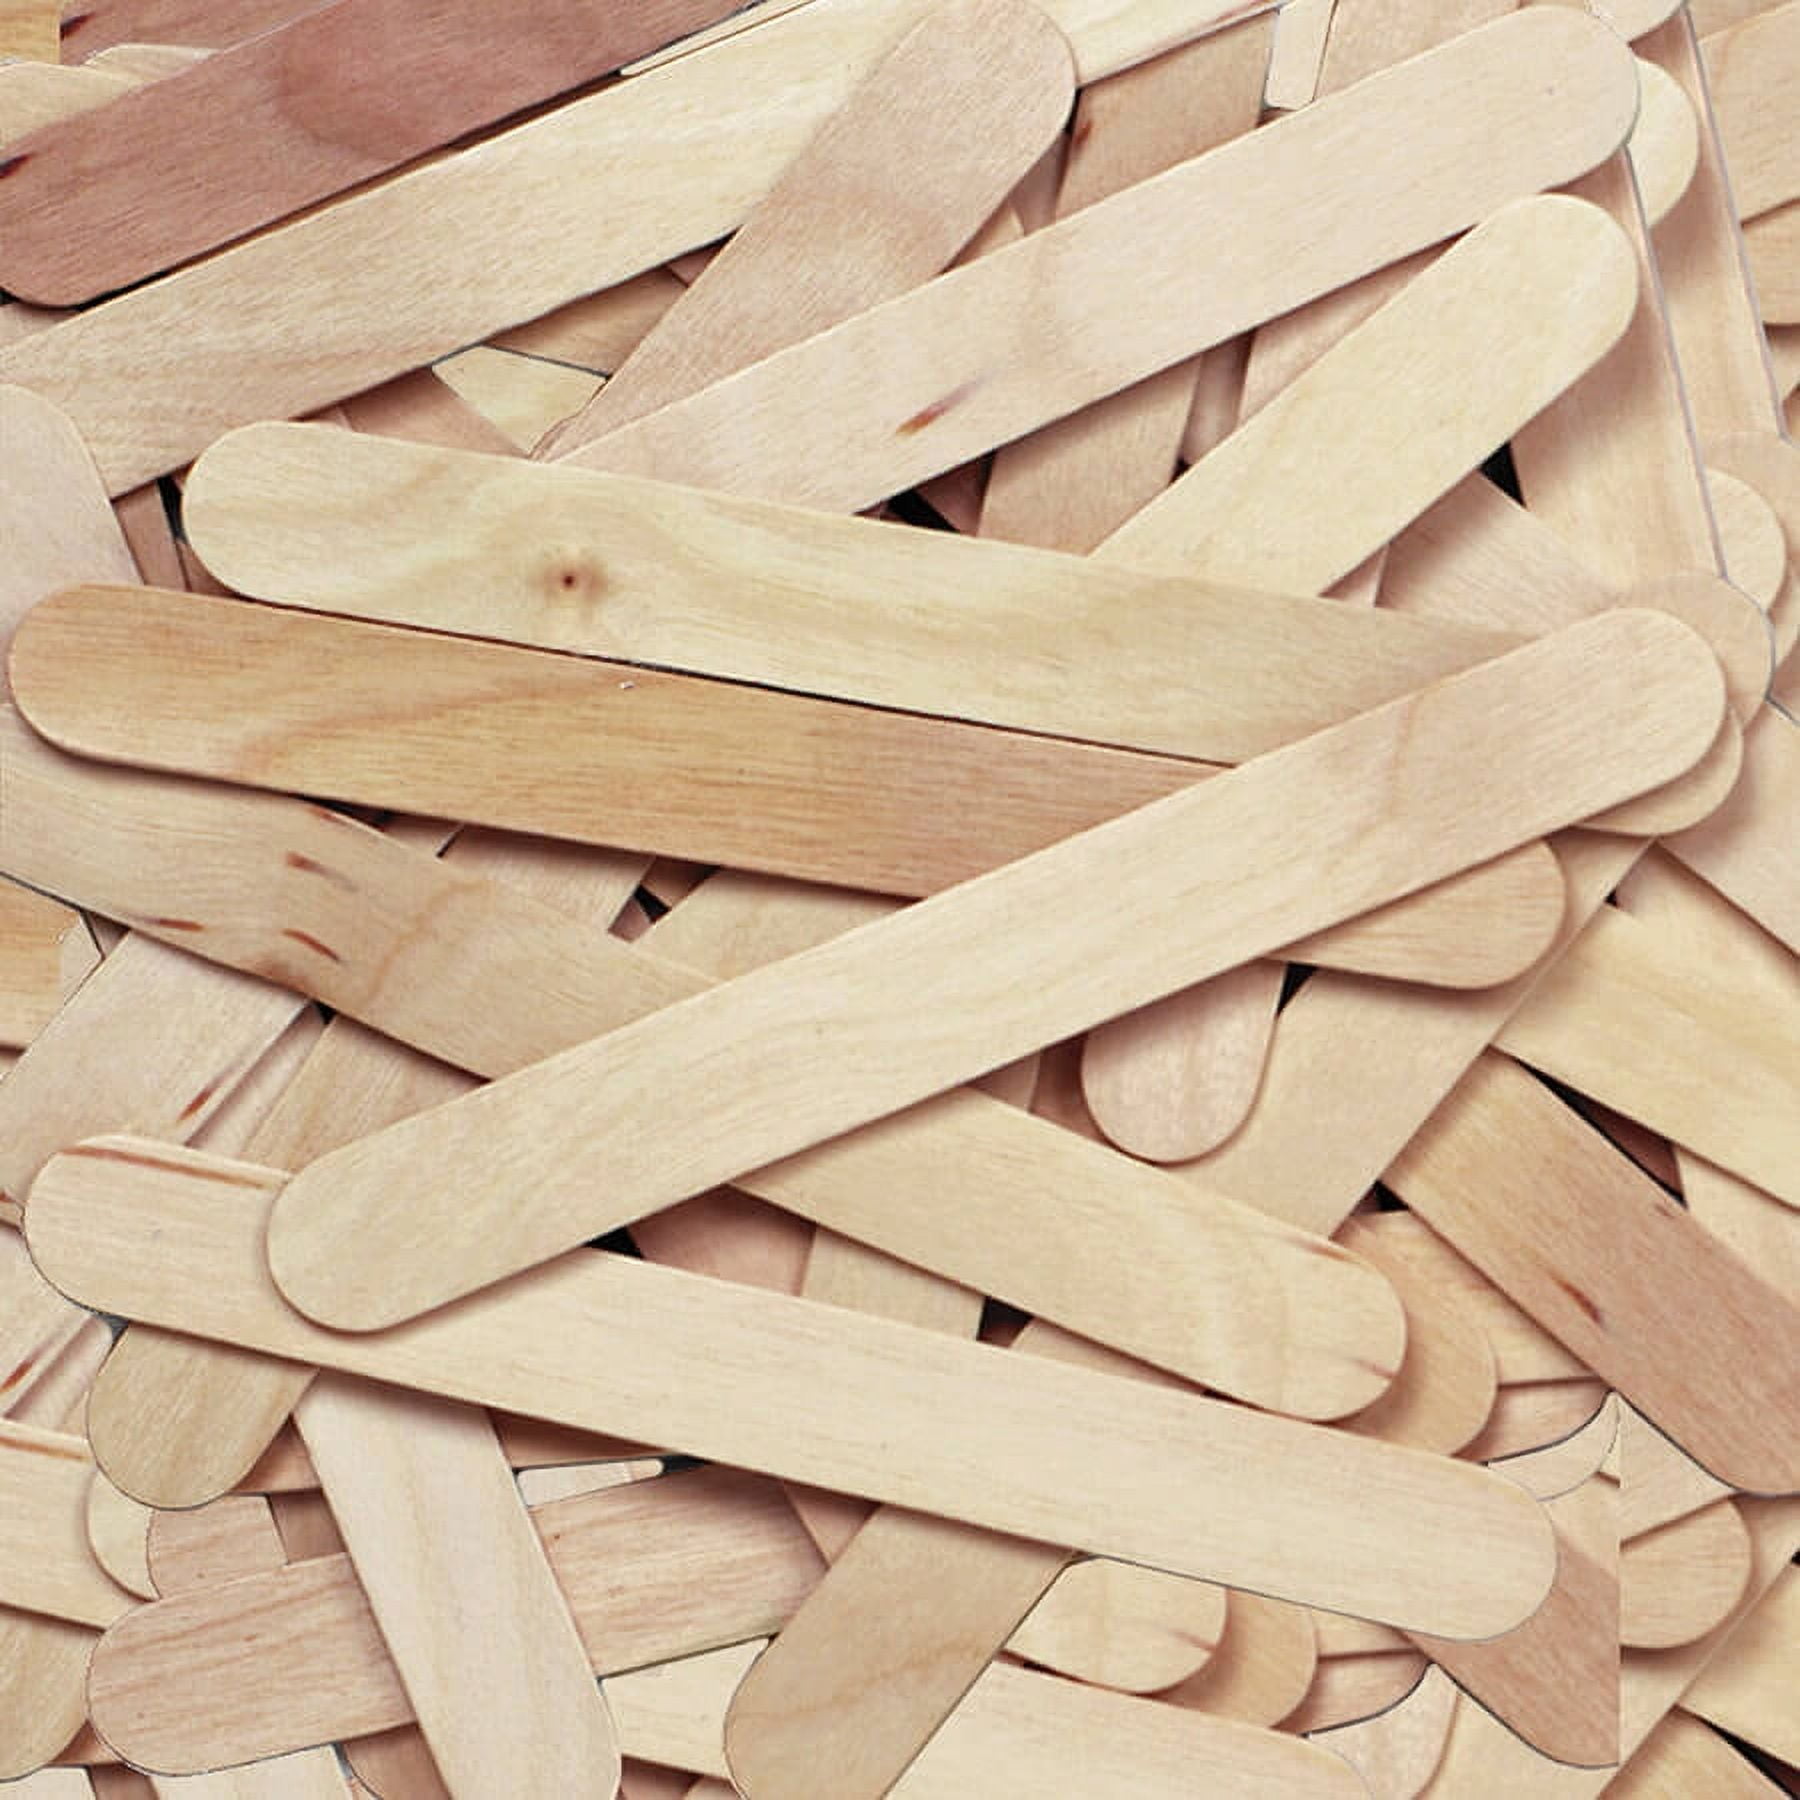 Creativity Street® Natural Mini Wooden Craft Sticks, 12 Packs of 500